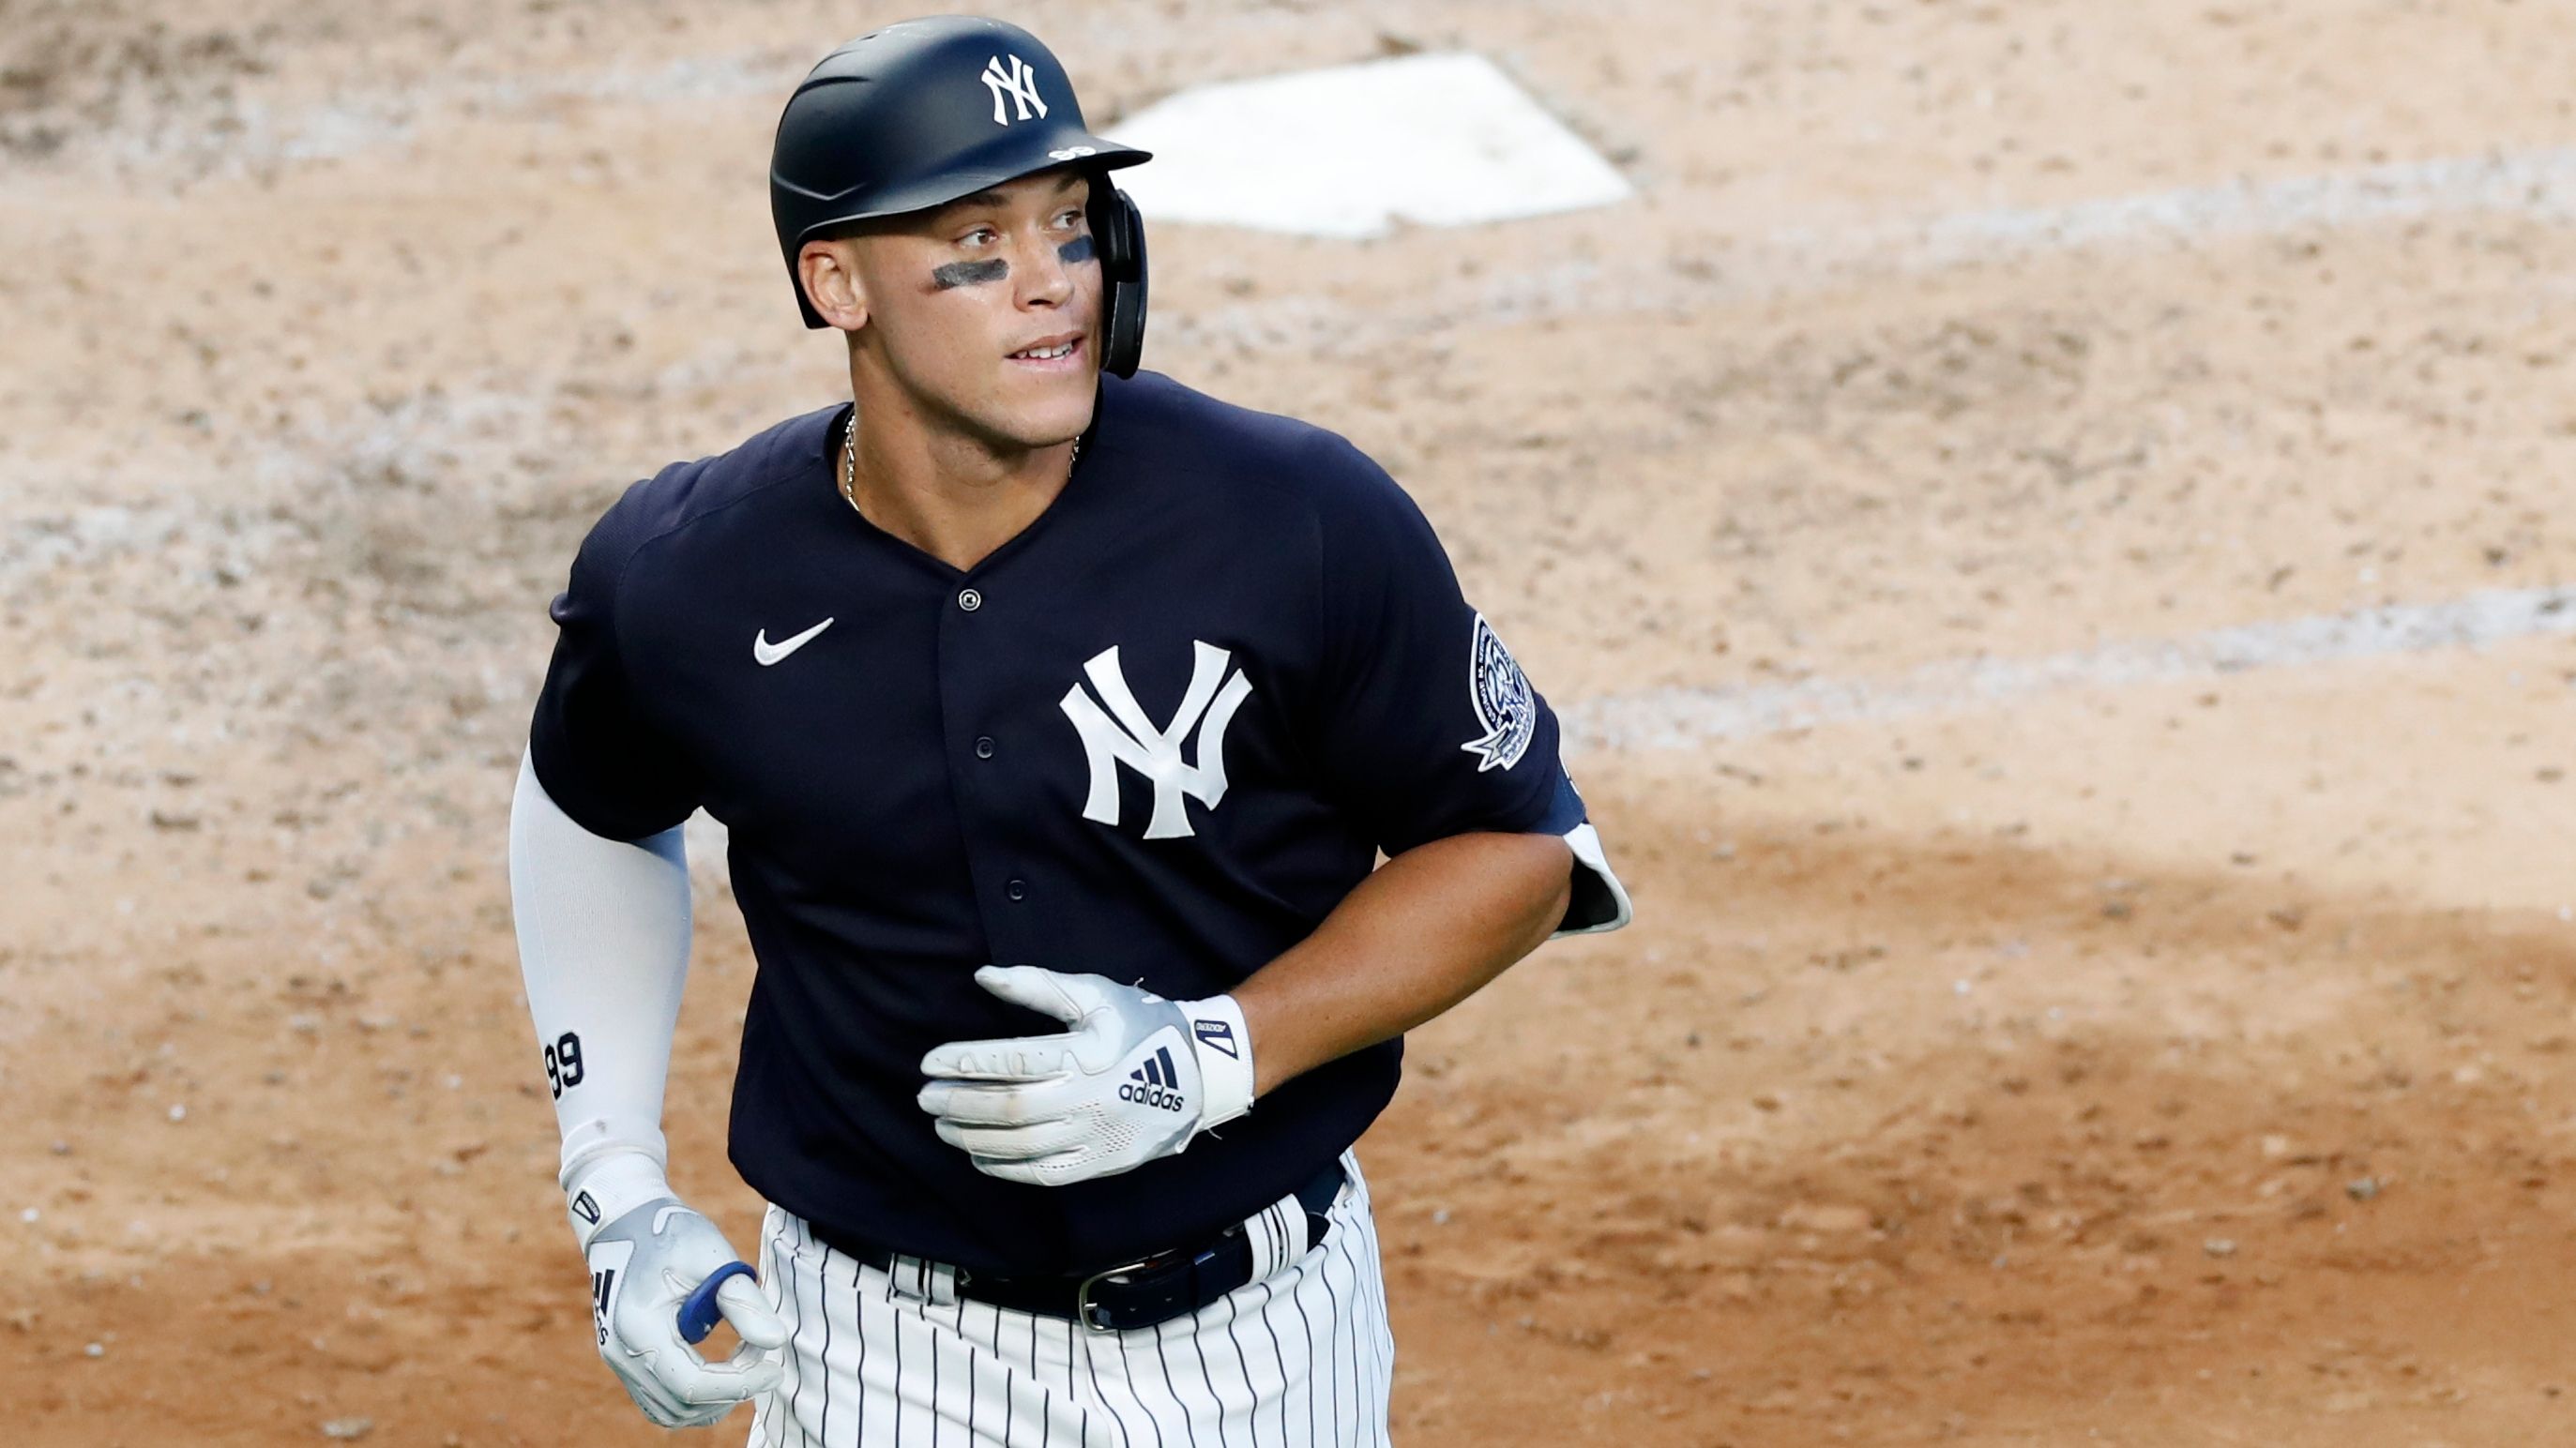 Aaron Judge joins fellow Yankees slugger Giancarlo Stanton on injured list